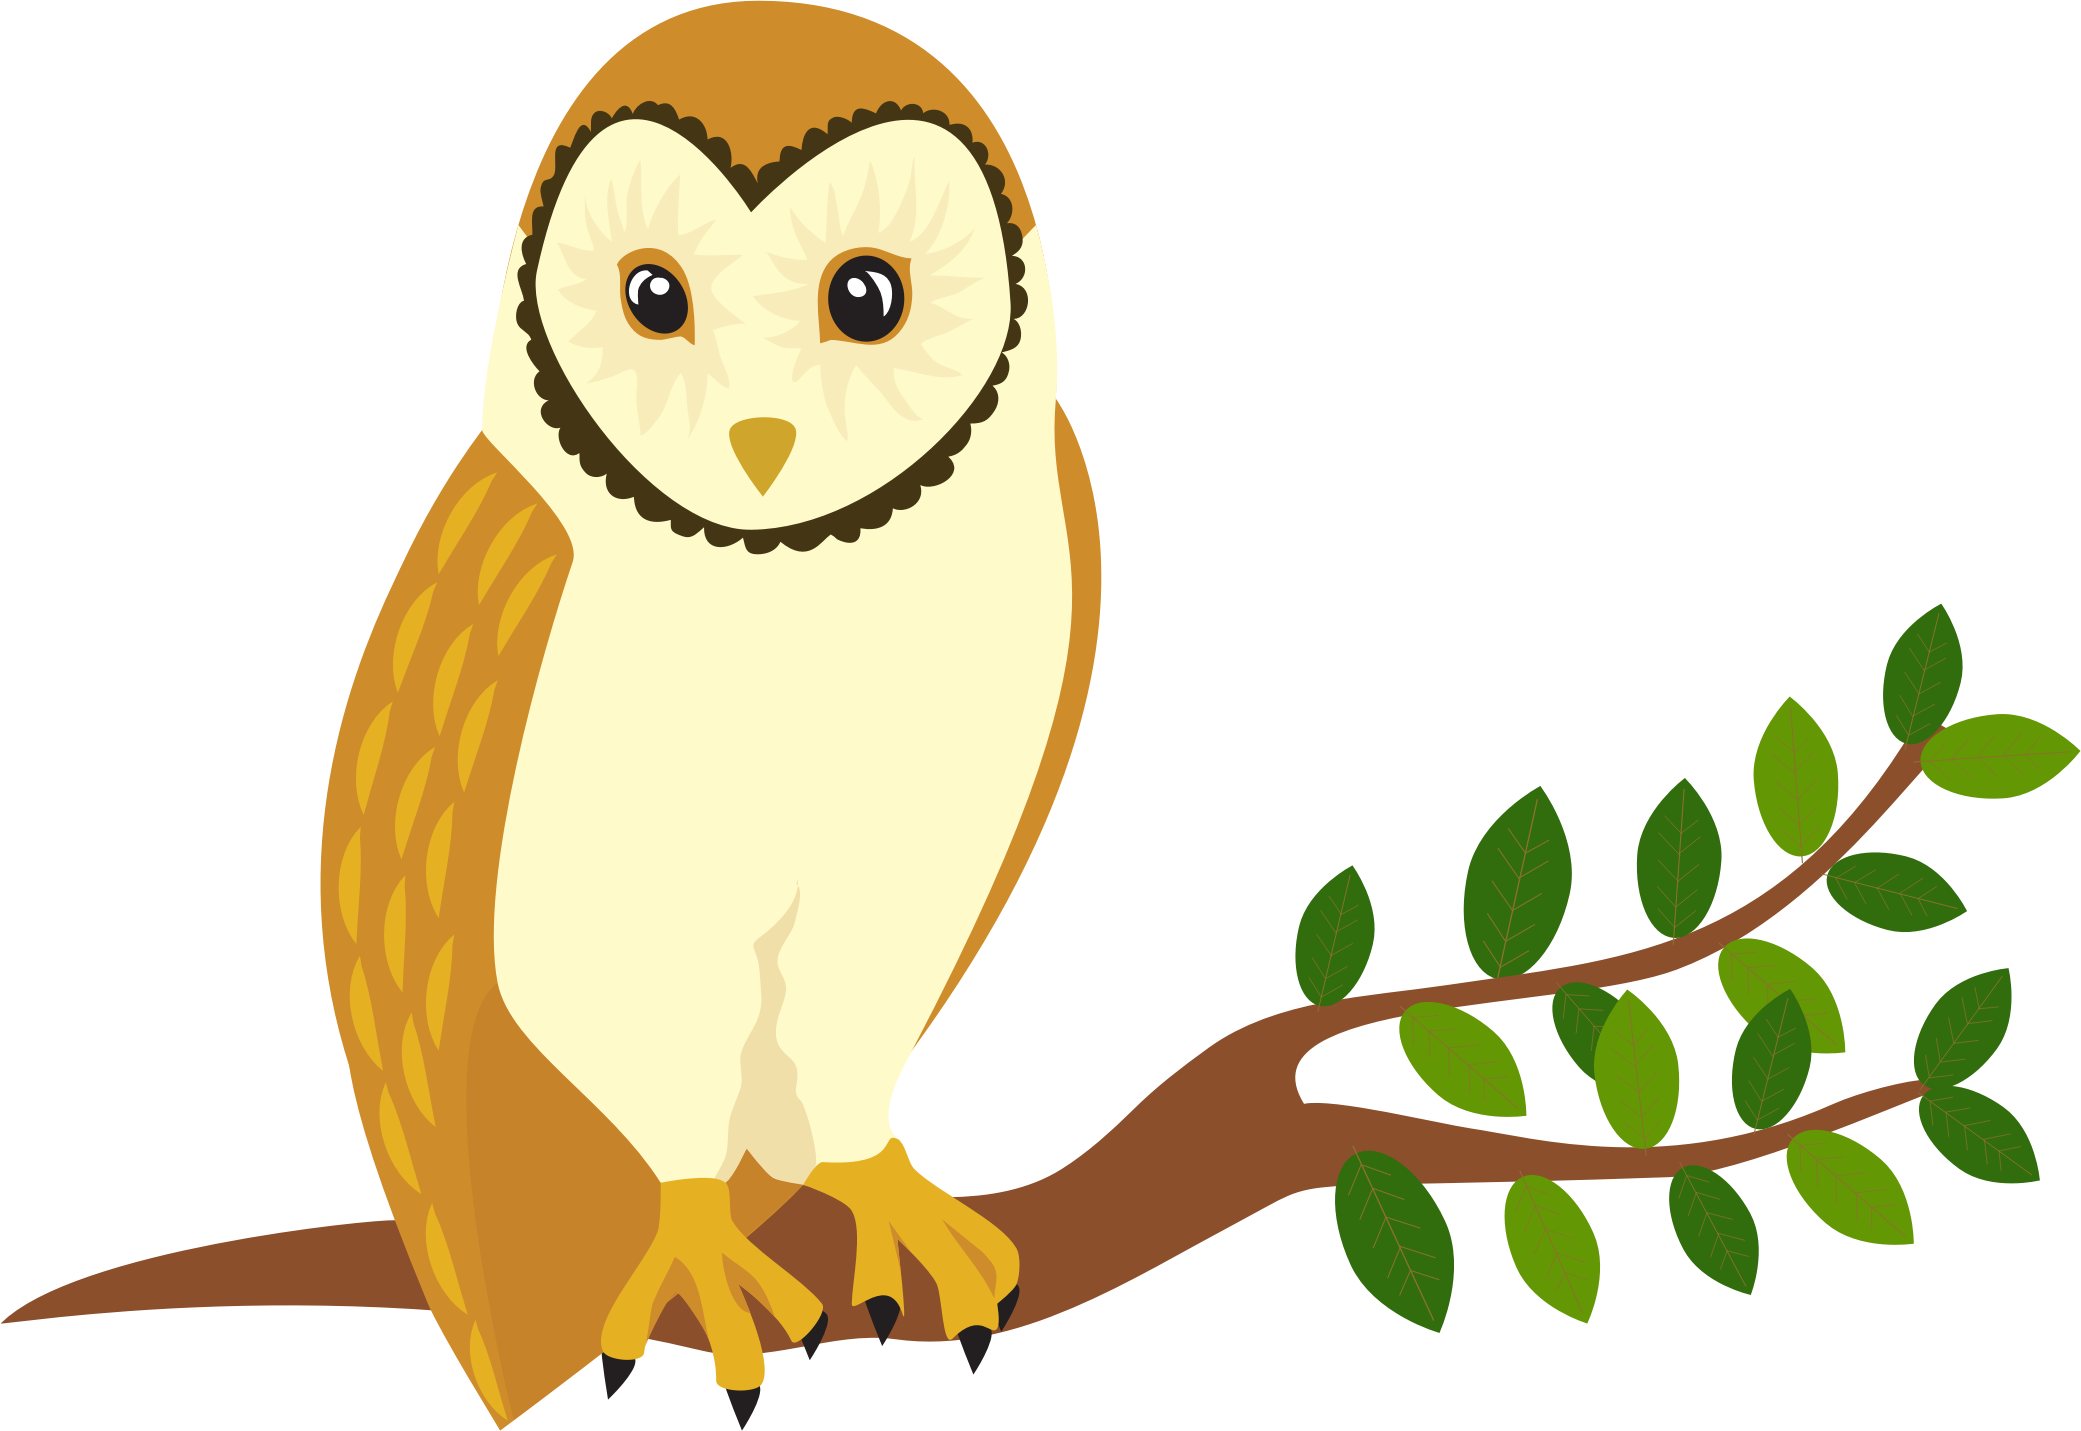 Big Image - Owl (2081x1431)